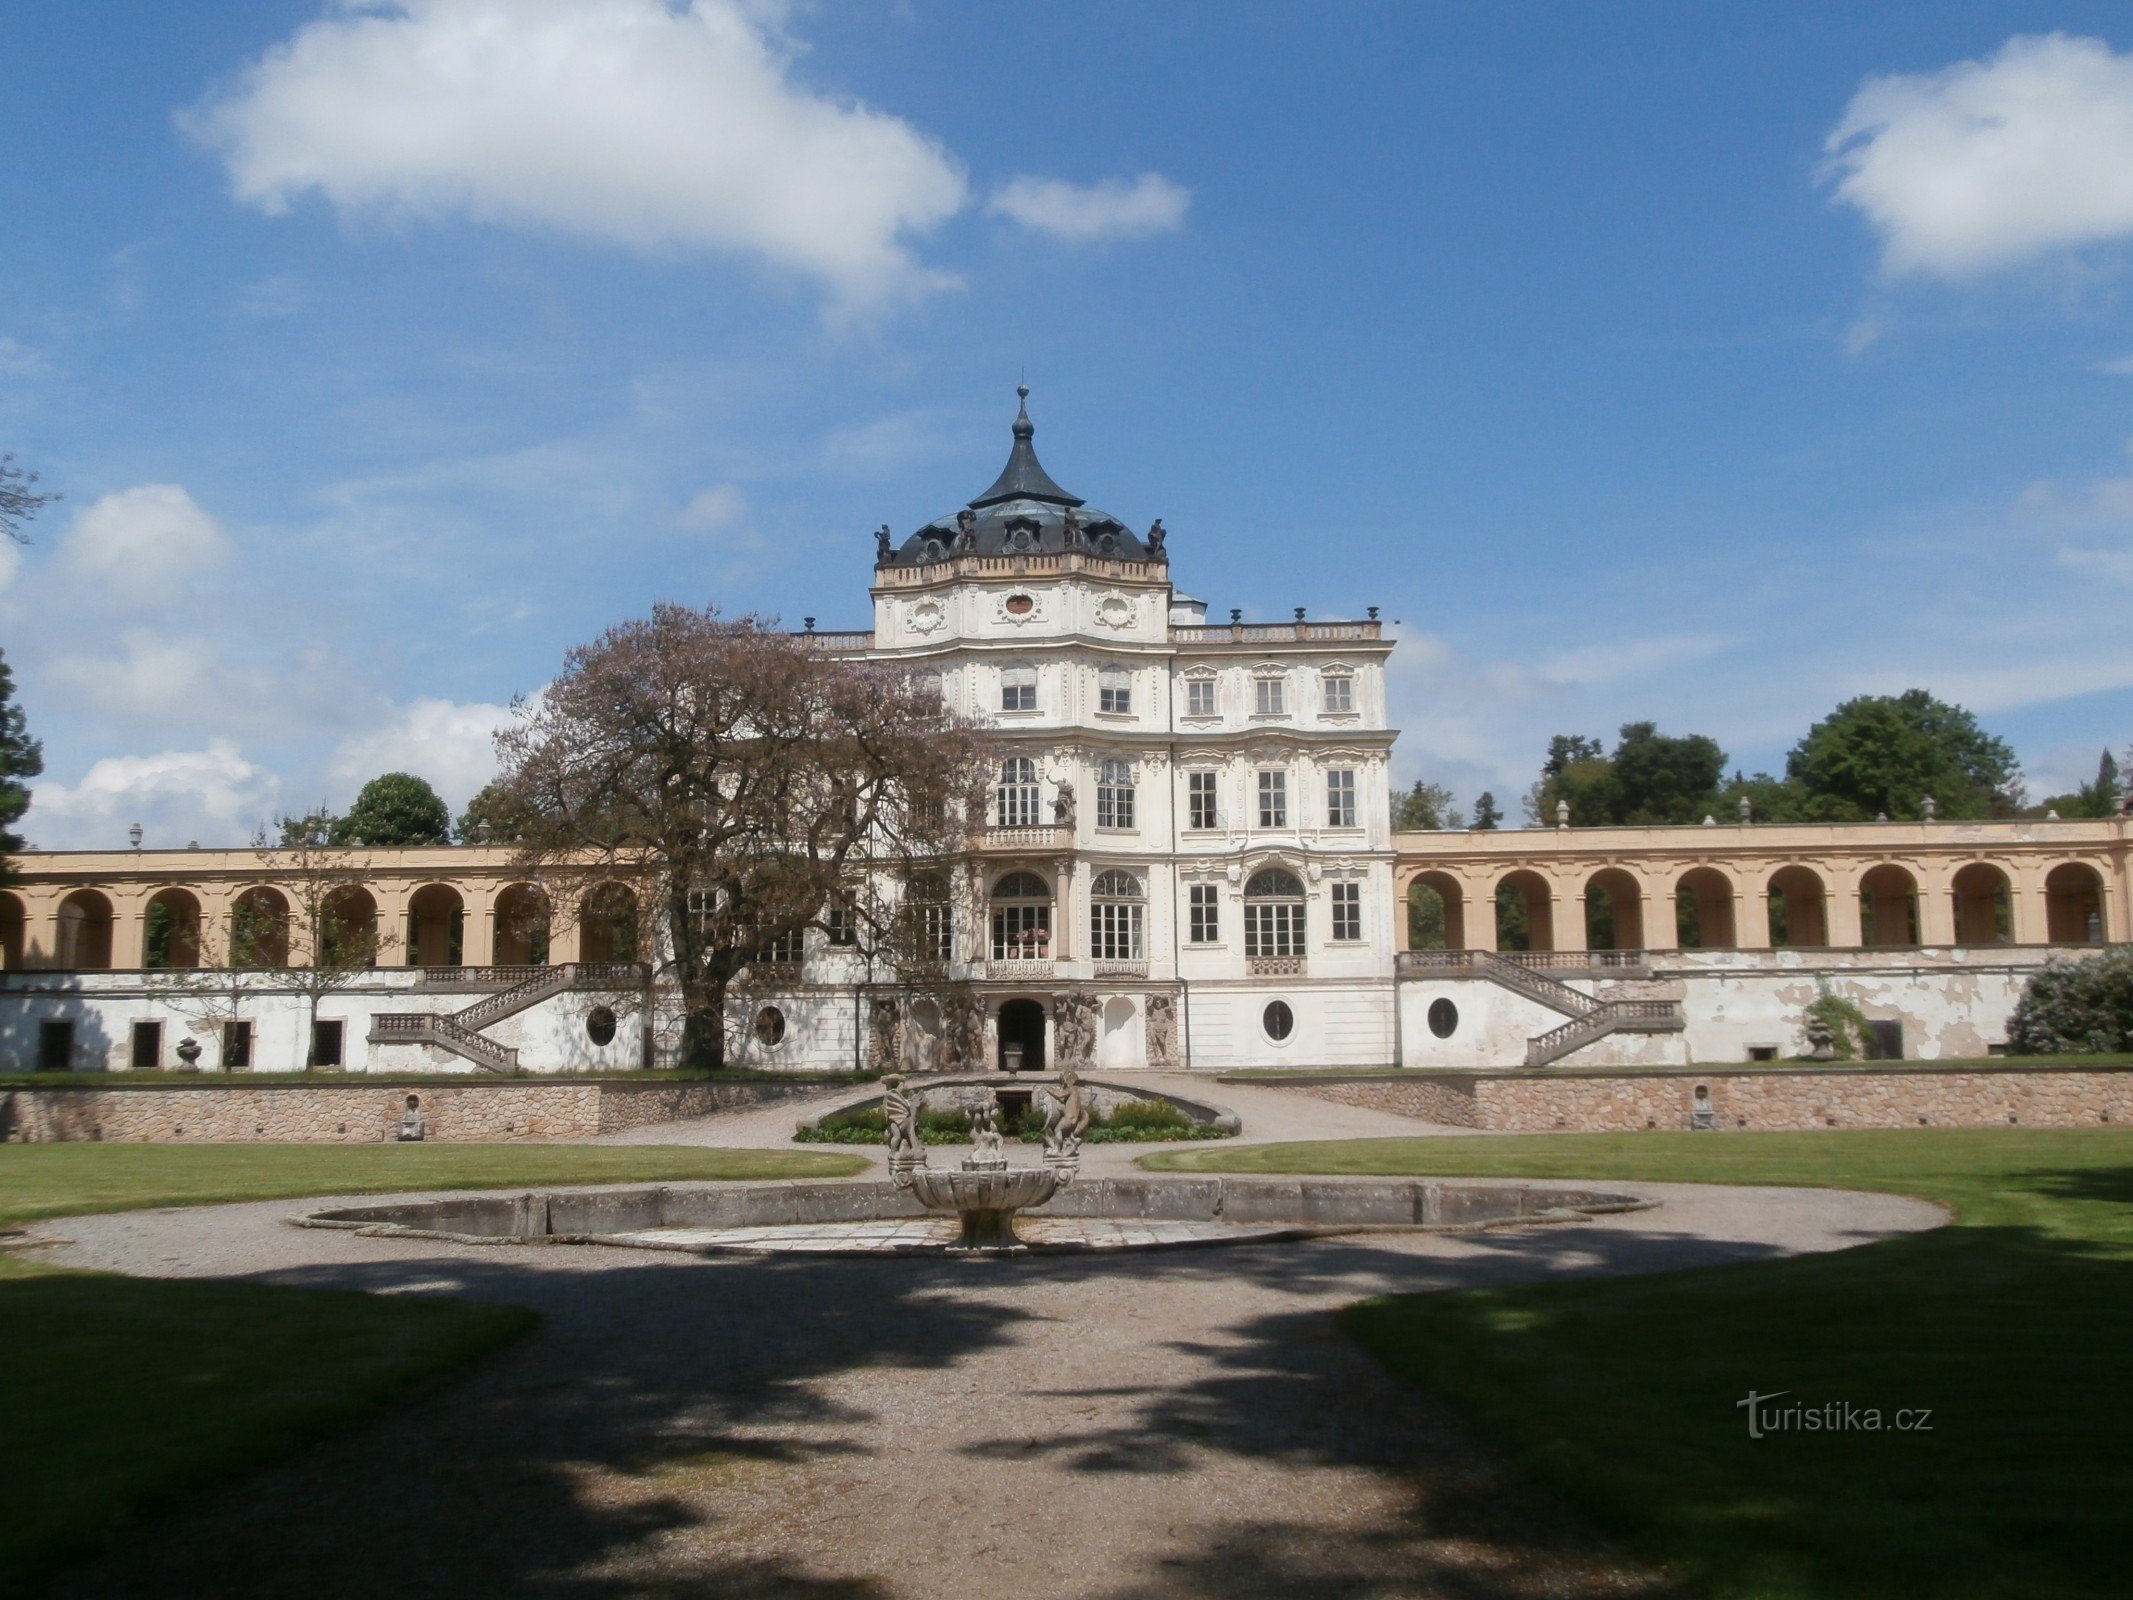 Castelul Ploskovice